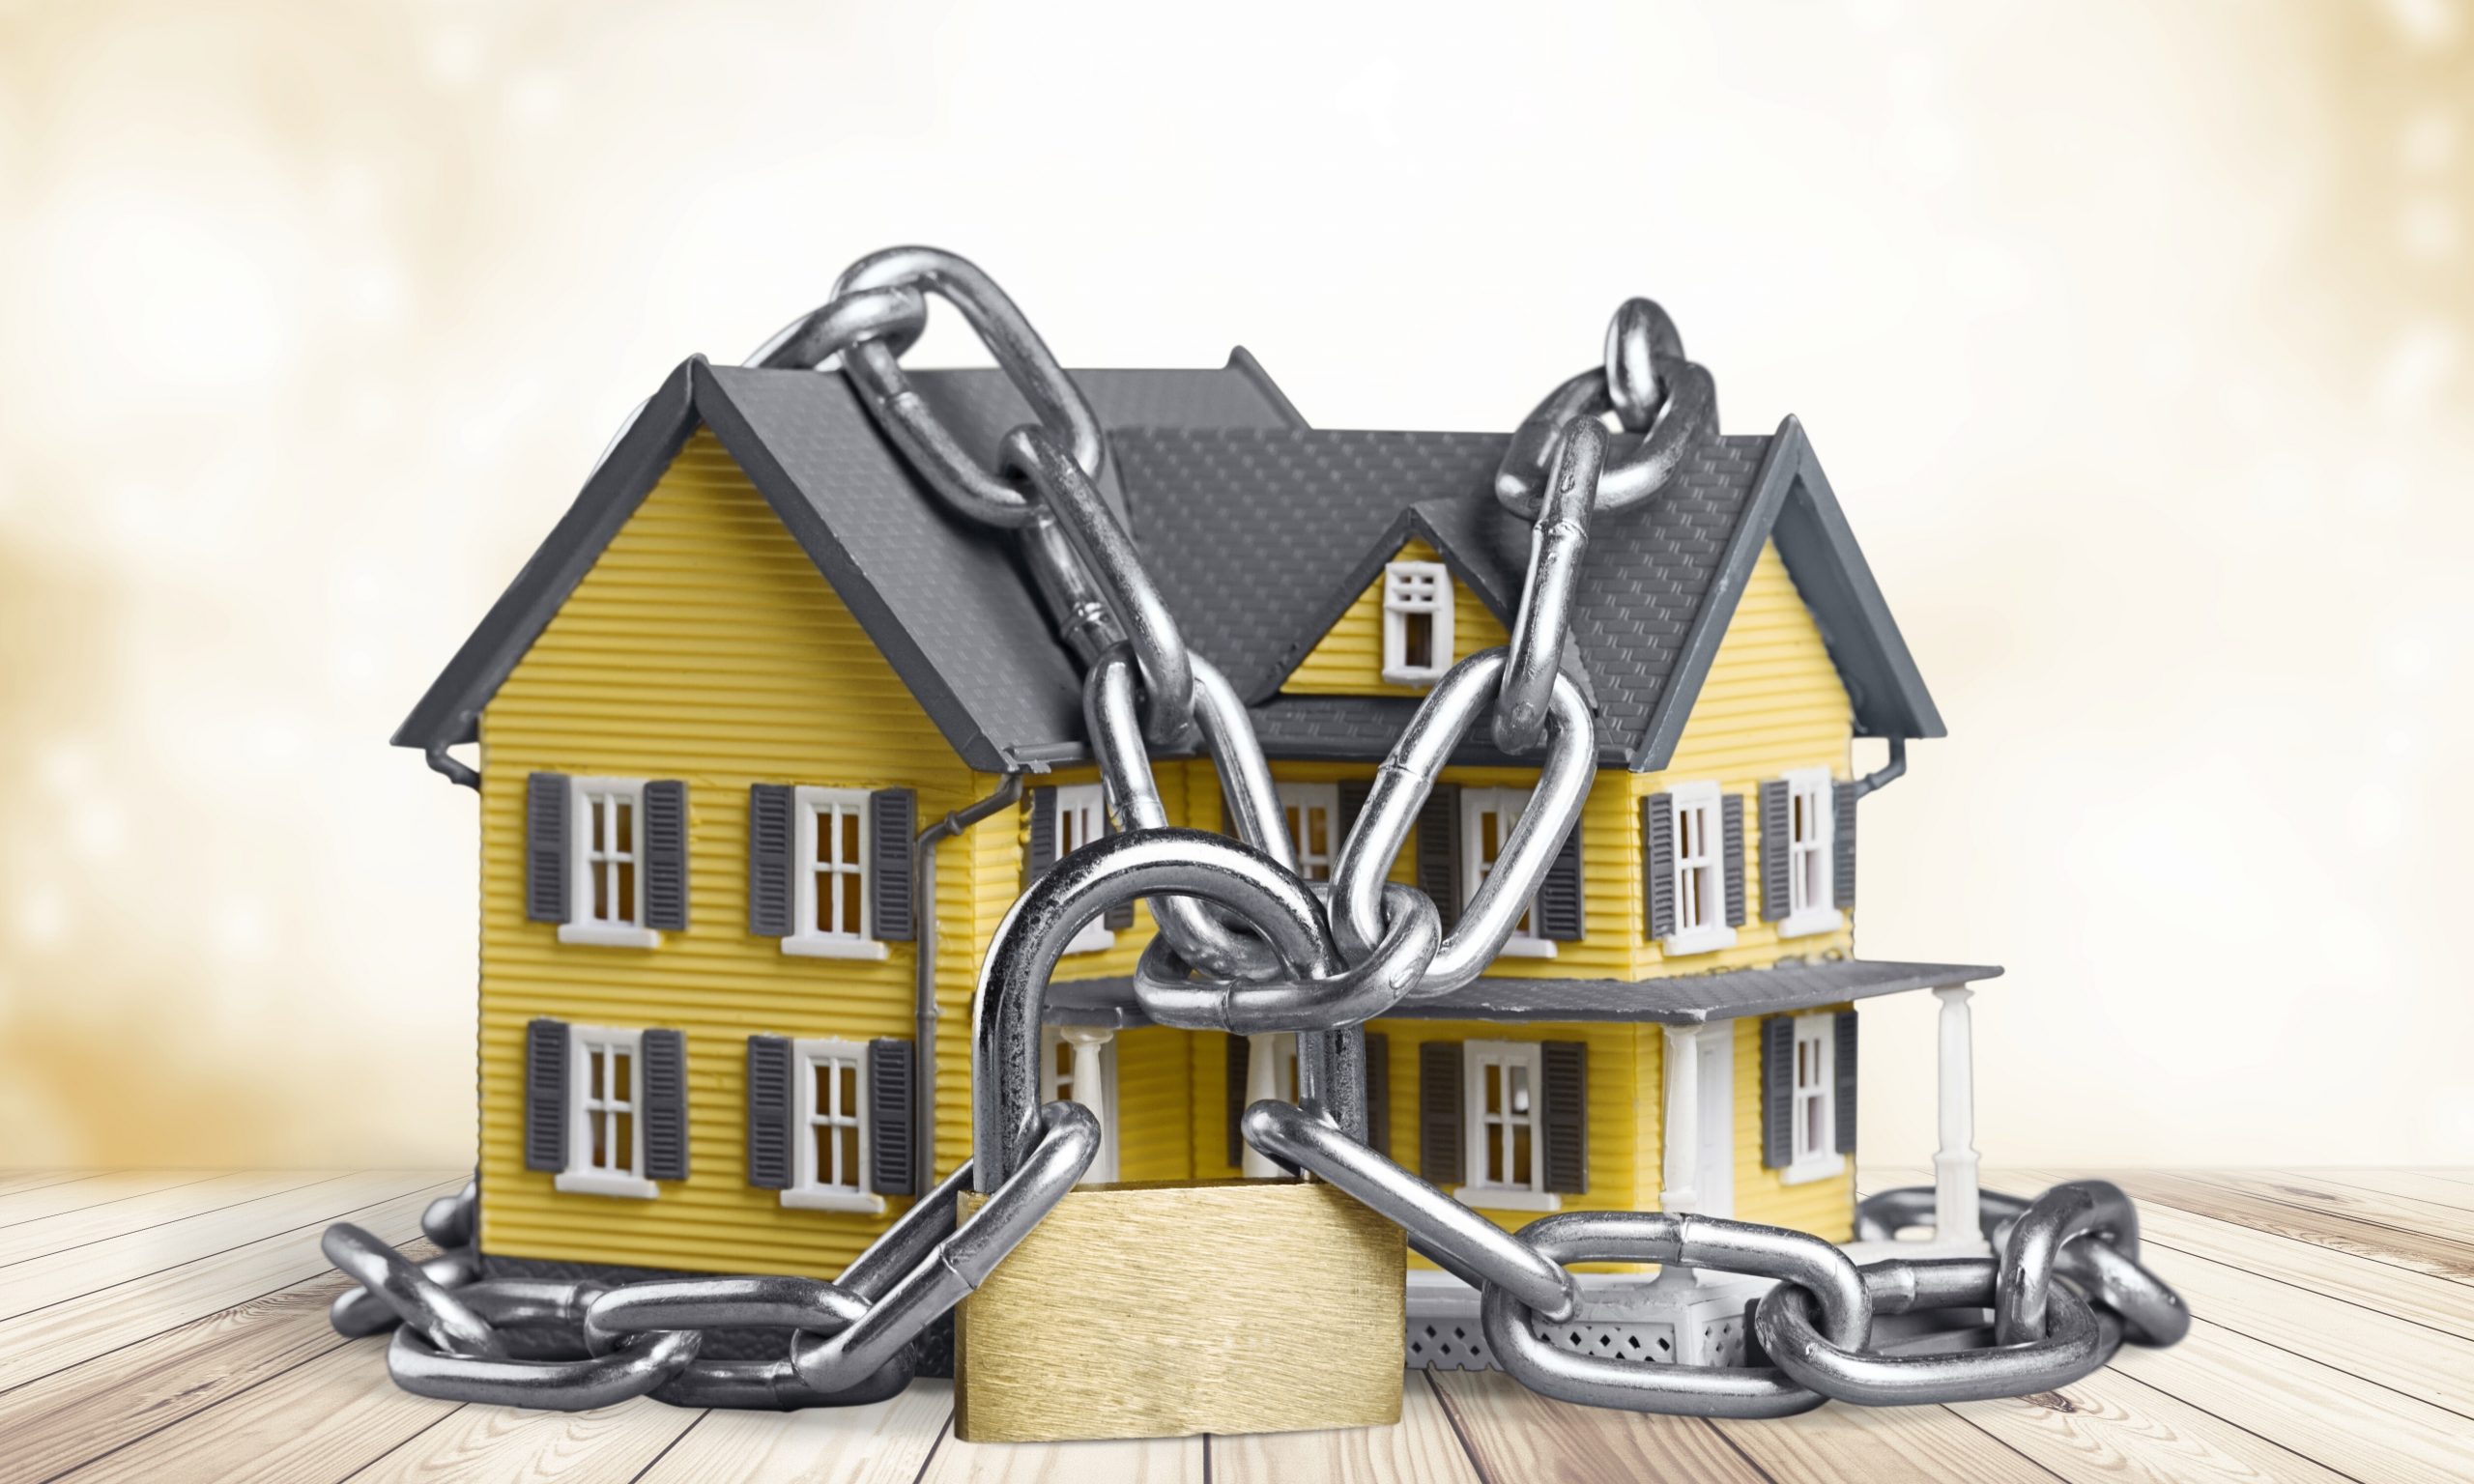 Аренда с правом выкупа недвижимости - подробности и преимущества